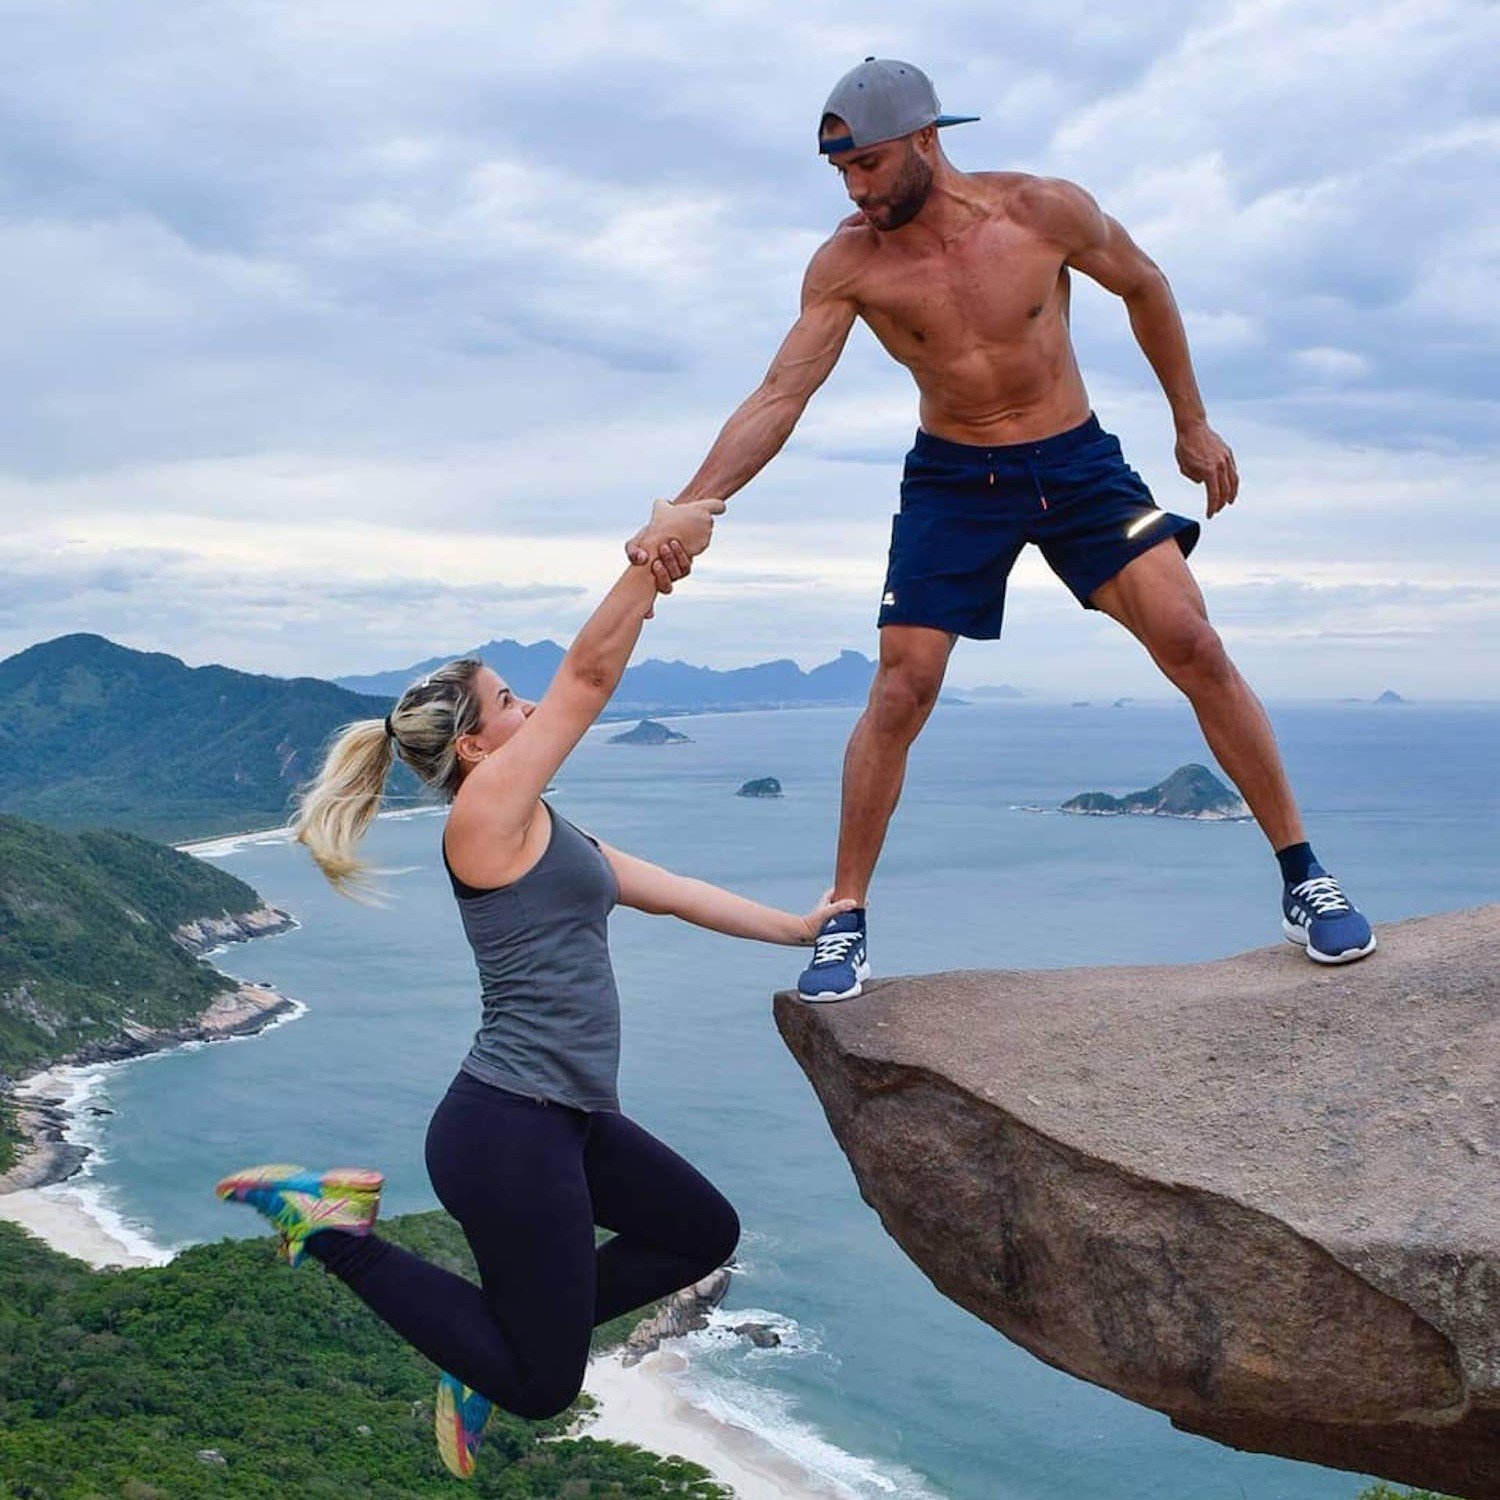 Fake Cliff in Brazil Pictures | POPSUGAR Smart Living